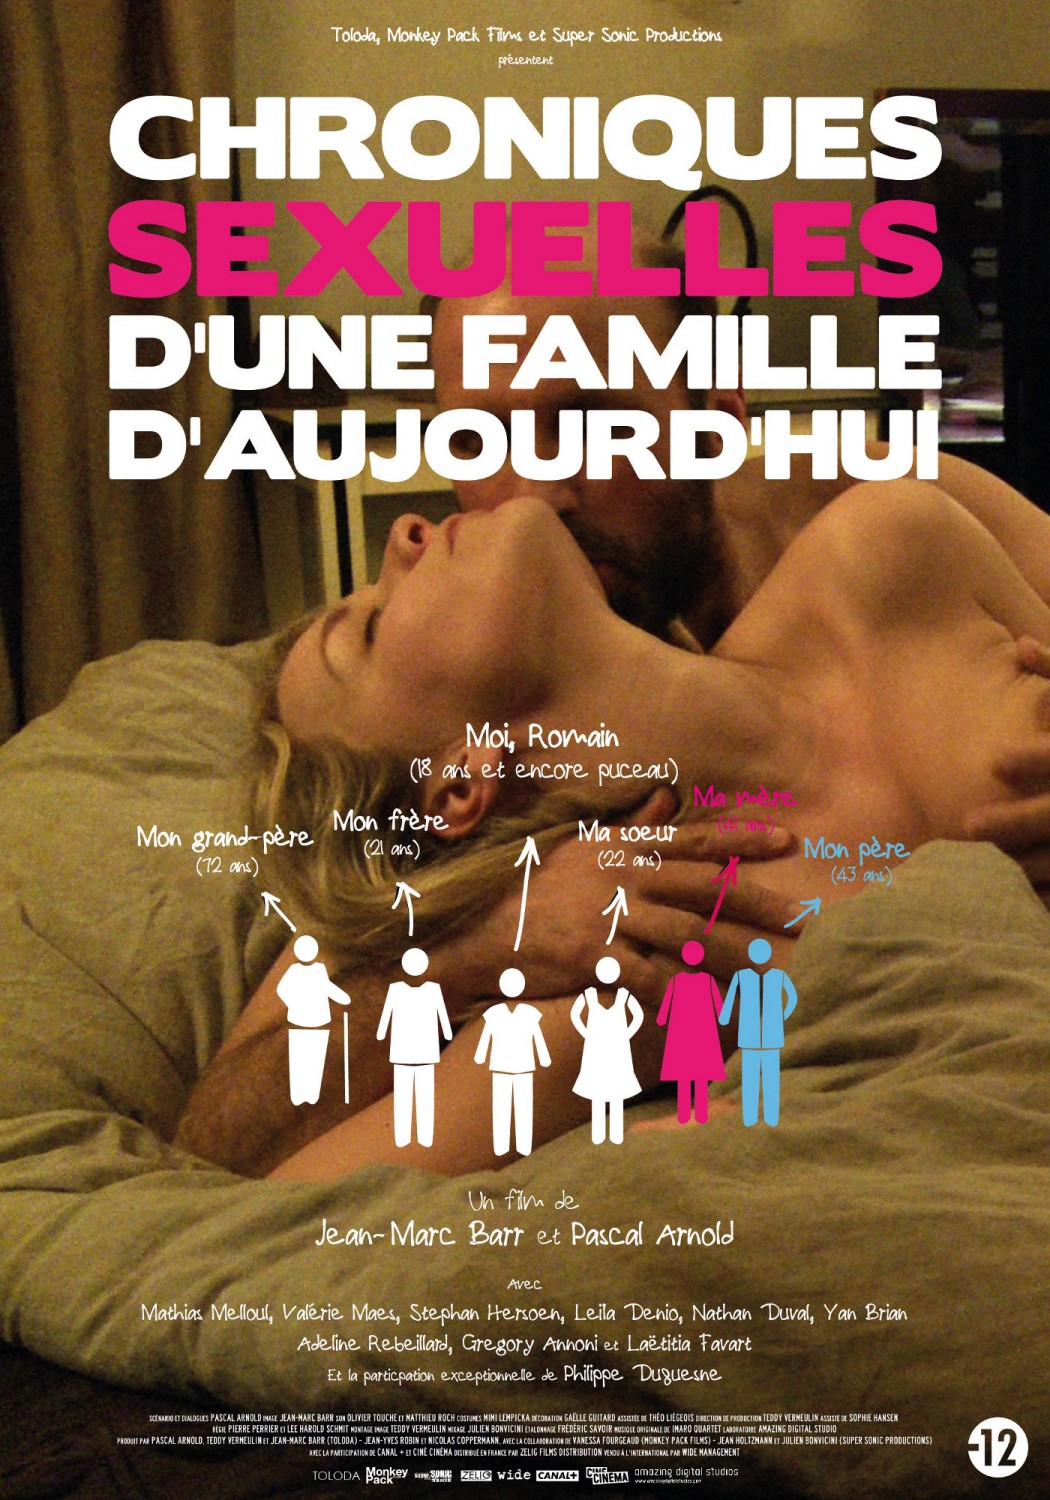 Extra Large Movie Poster Image for Chroniques sexuelles d'une famille d'aujourd'hui (#4 of 6)